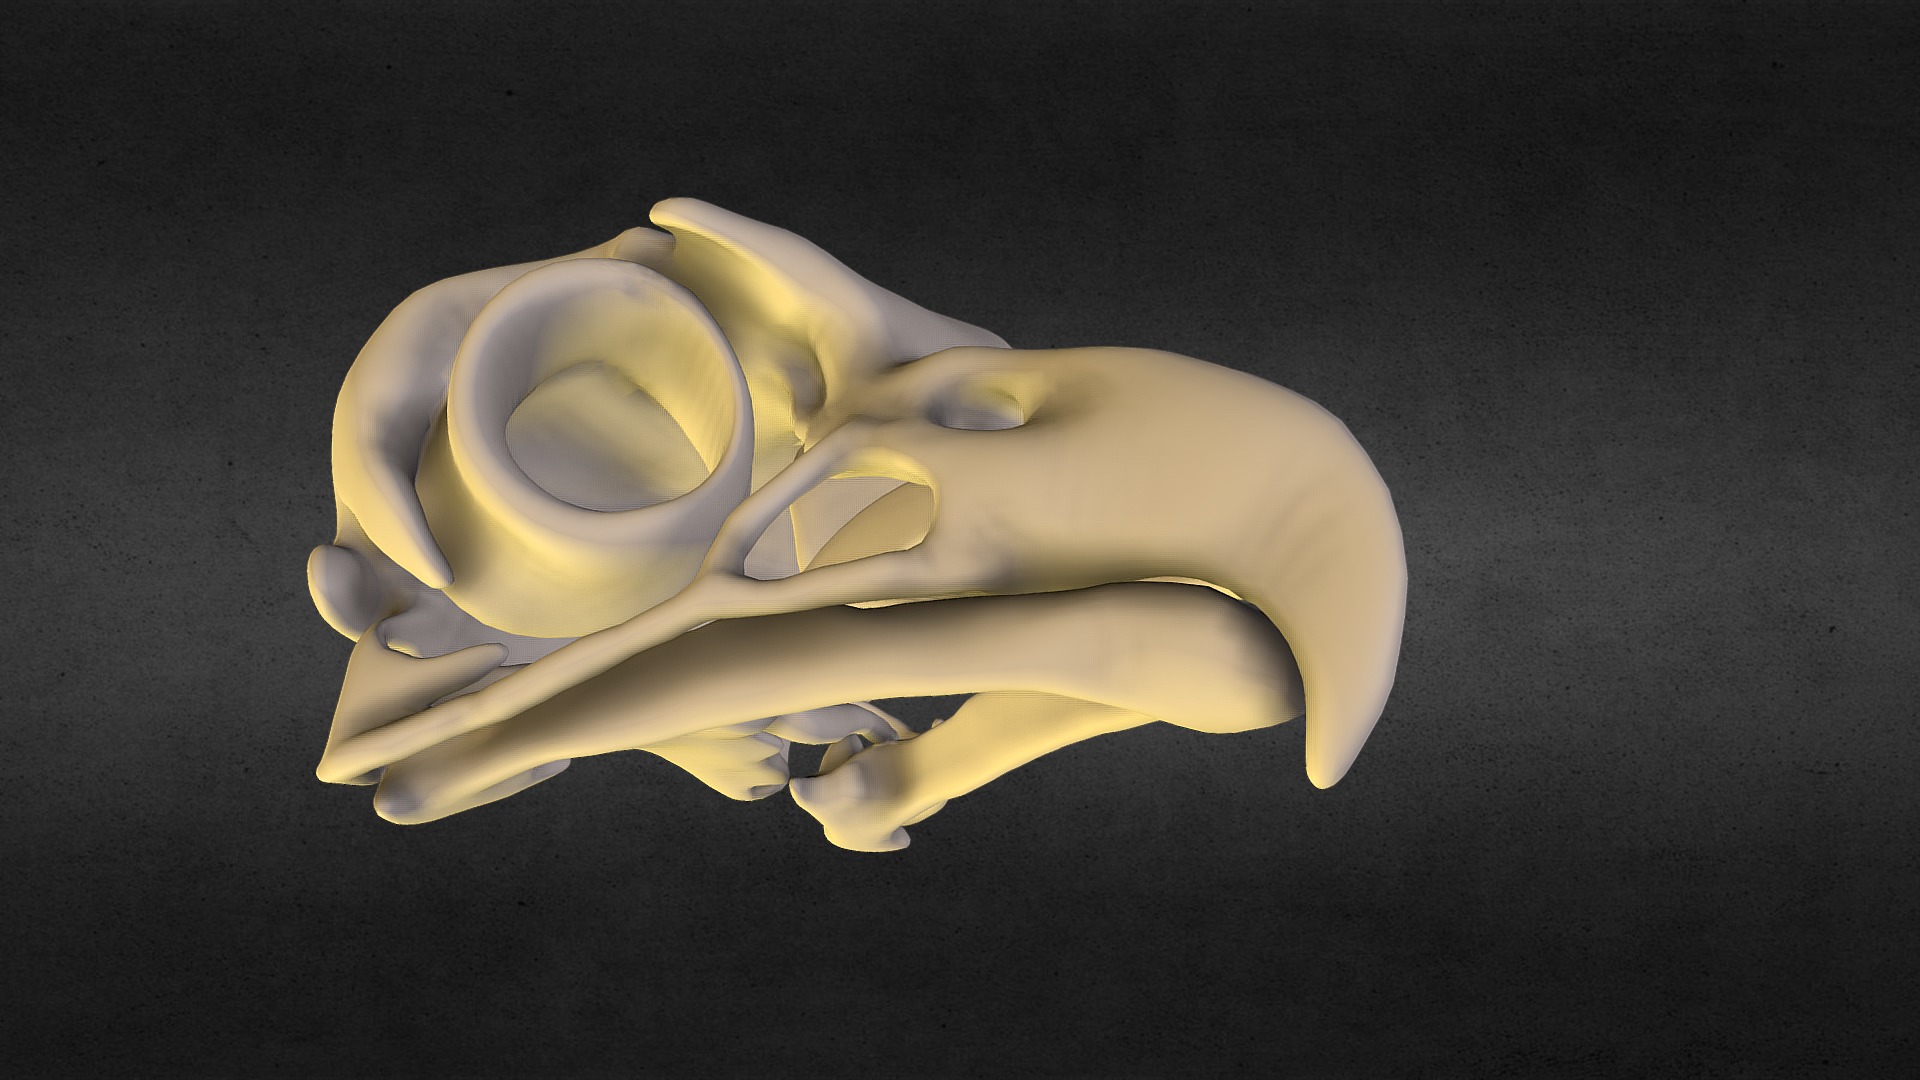 3D model AC Origins 3D printable Eagle Skull pendant - This is a 3D model of the AC Origins 3D printable Eagle Skull pendant. The 3D model is about a white object with a black background.